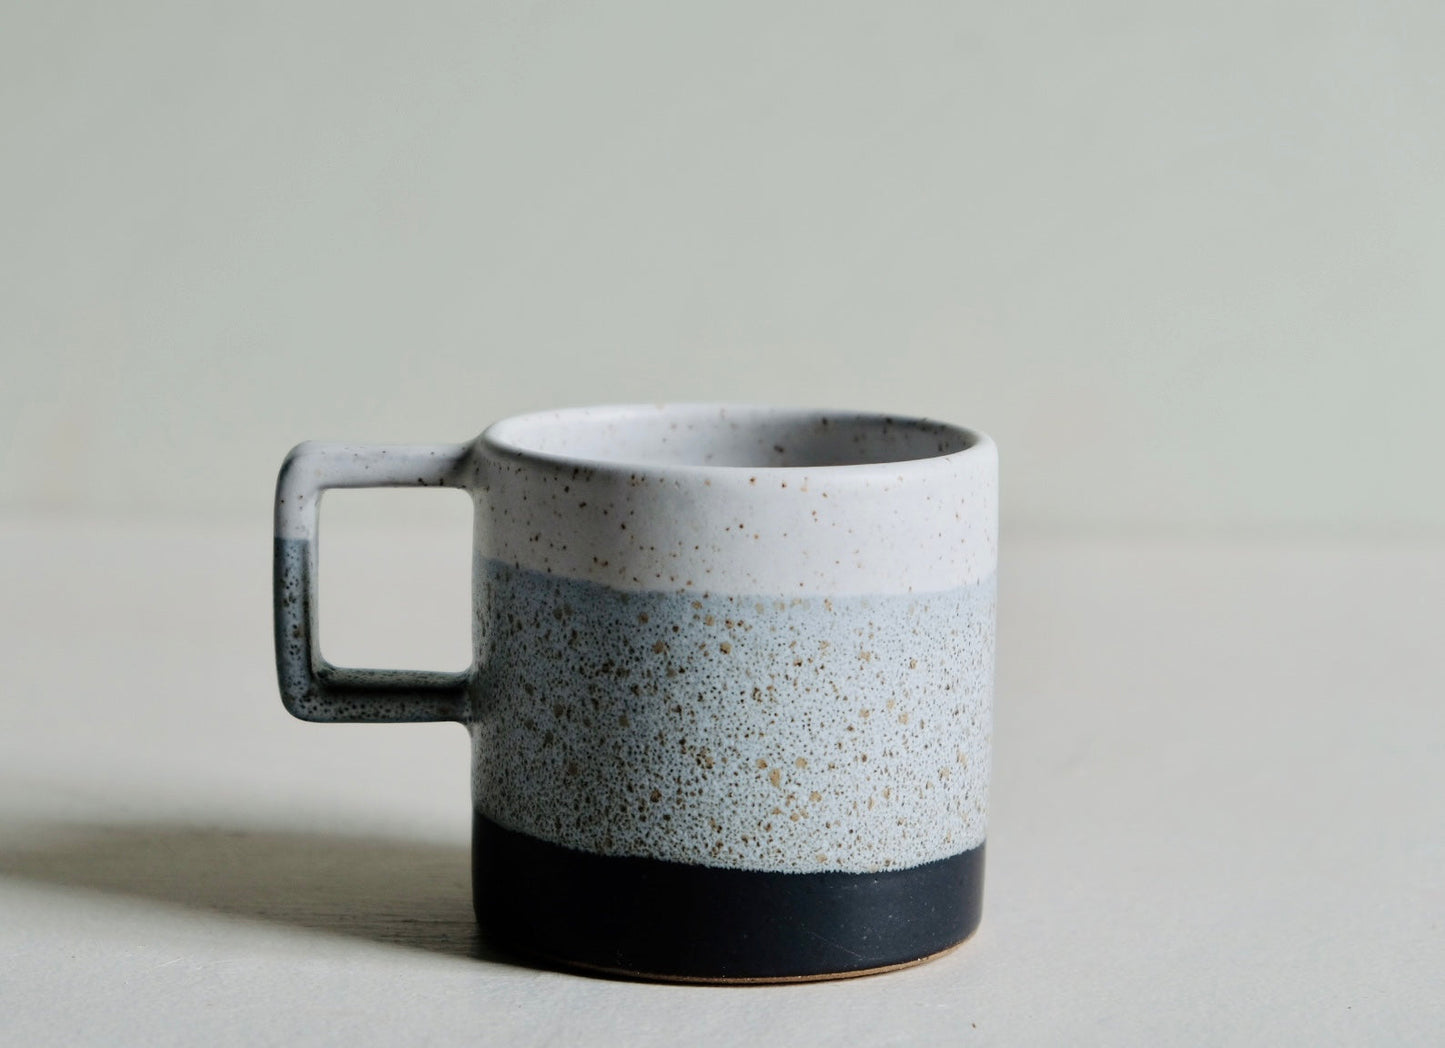 A handmade ceramic mug dipped in a luminous black, grey, and white speckled glaze